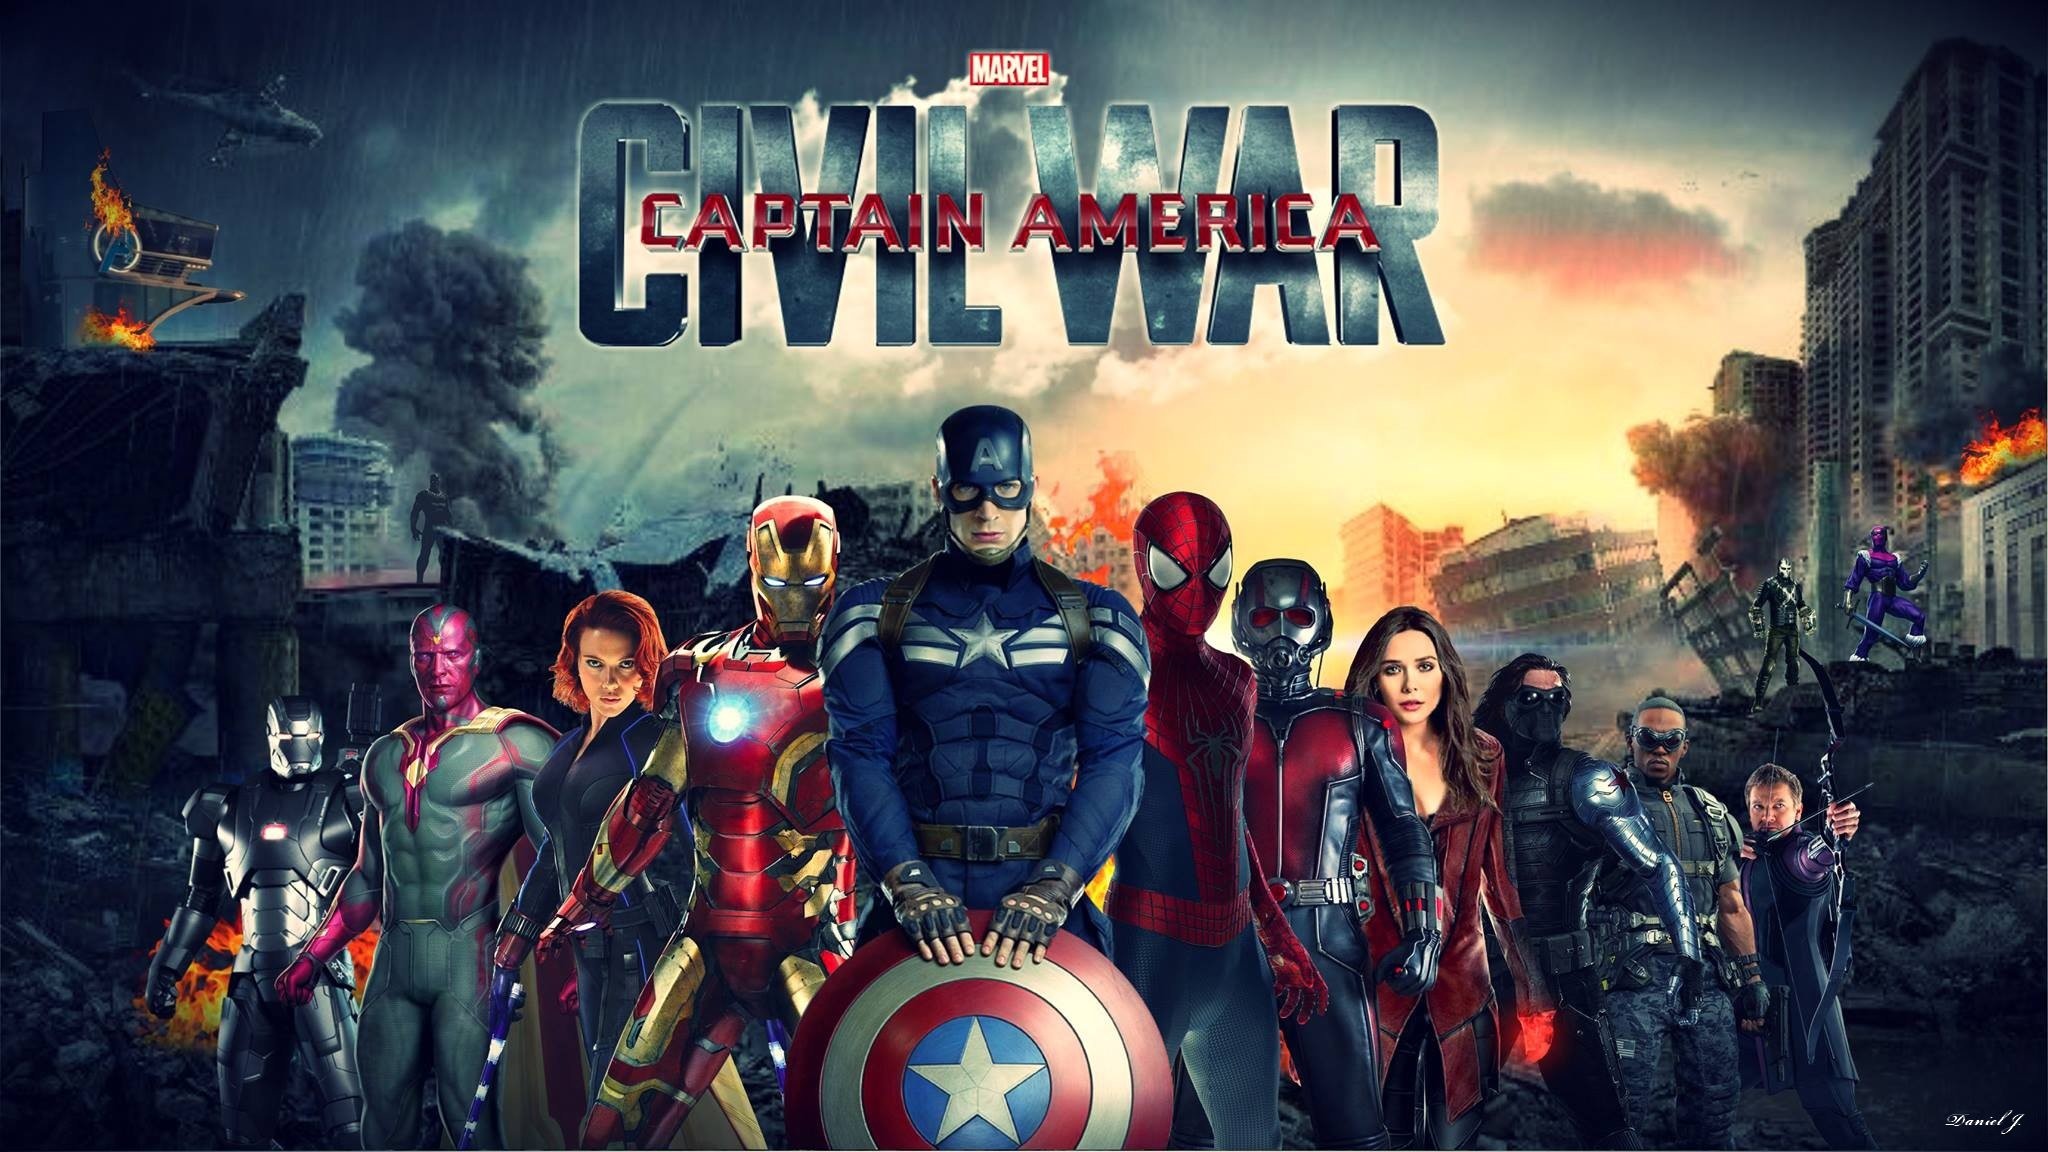 2048x1152 Captain America Civil War Wallpapers HD | HD Wallpapers | Pinterest |  Marvel civil war, Hd wallpaper and Wallpaper